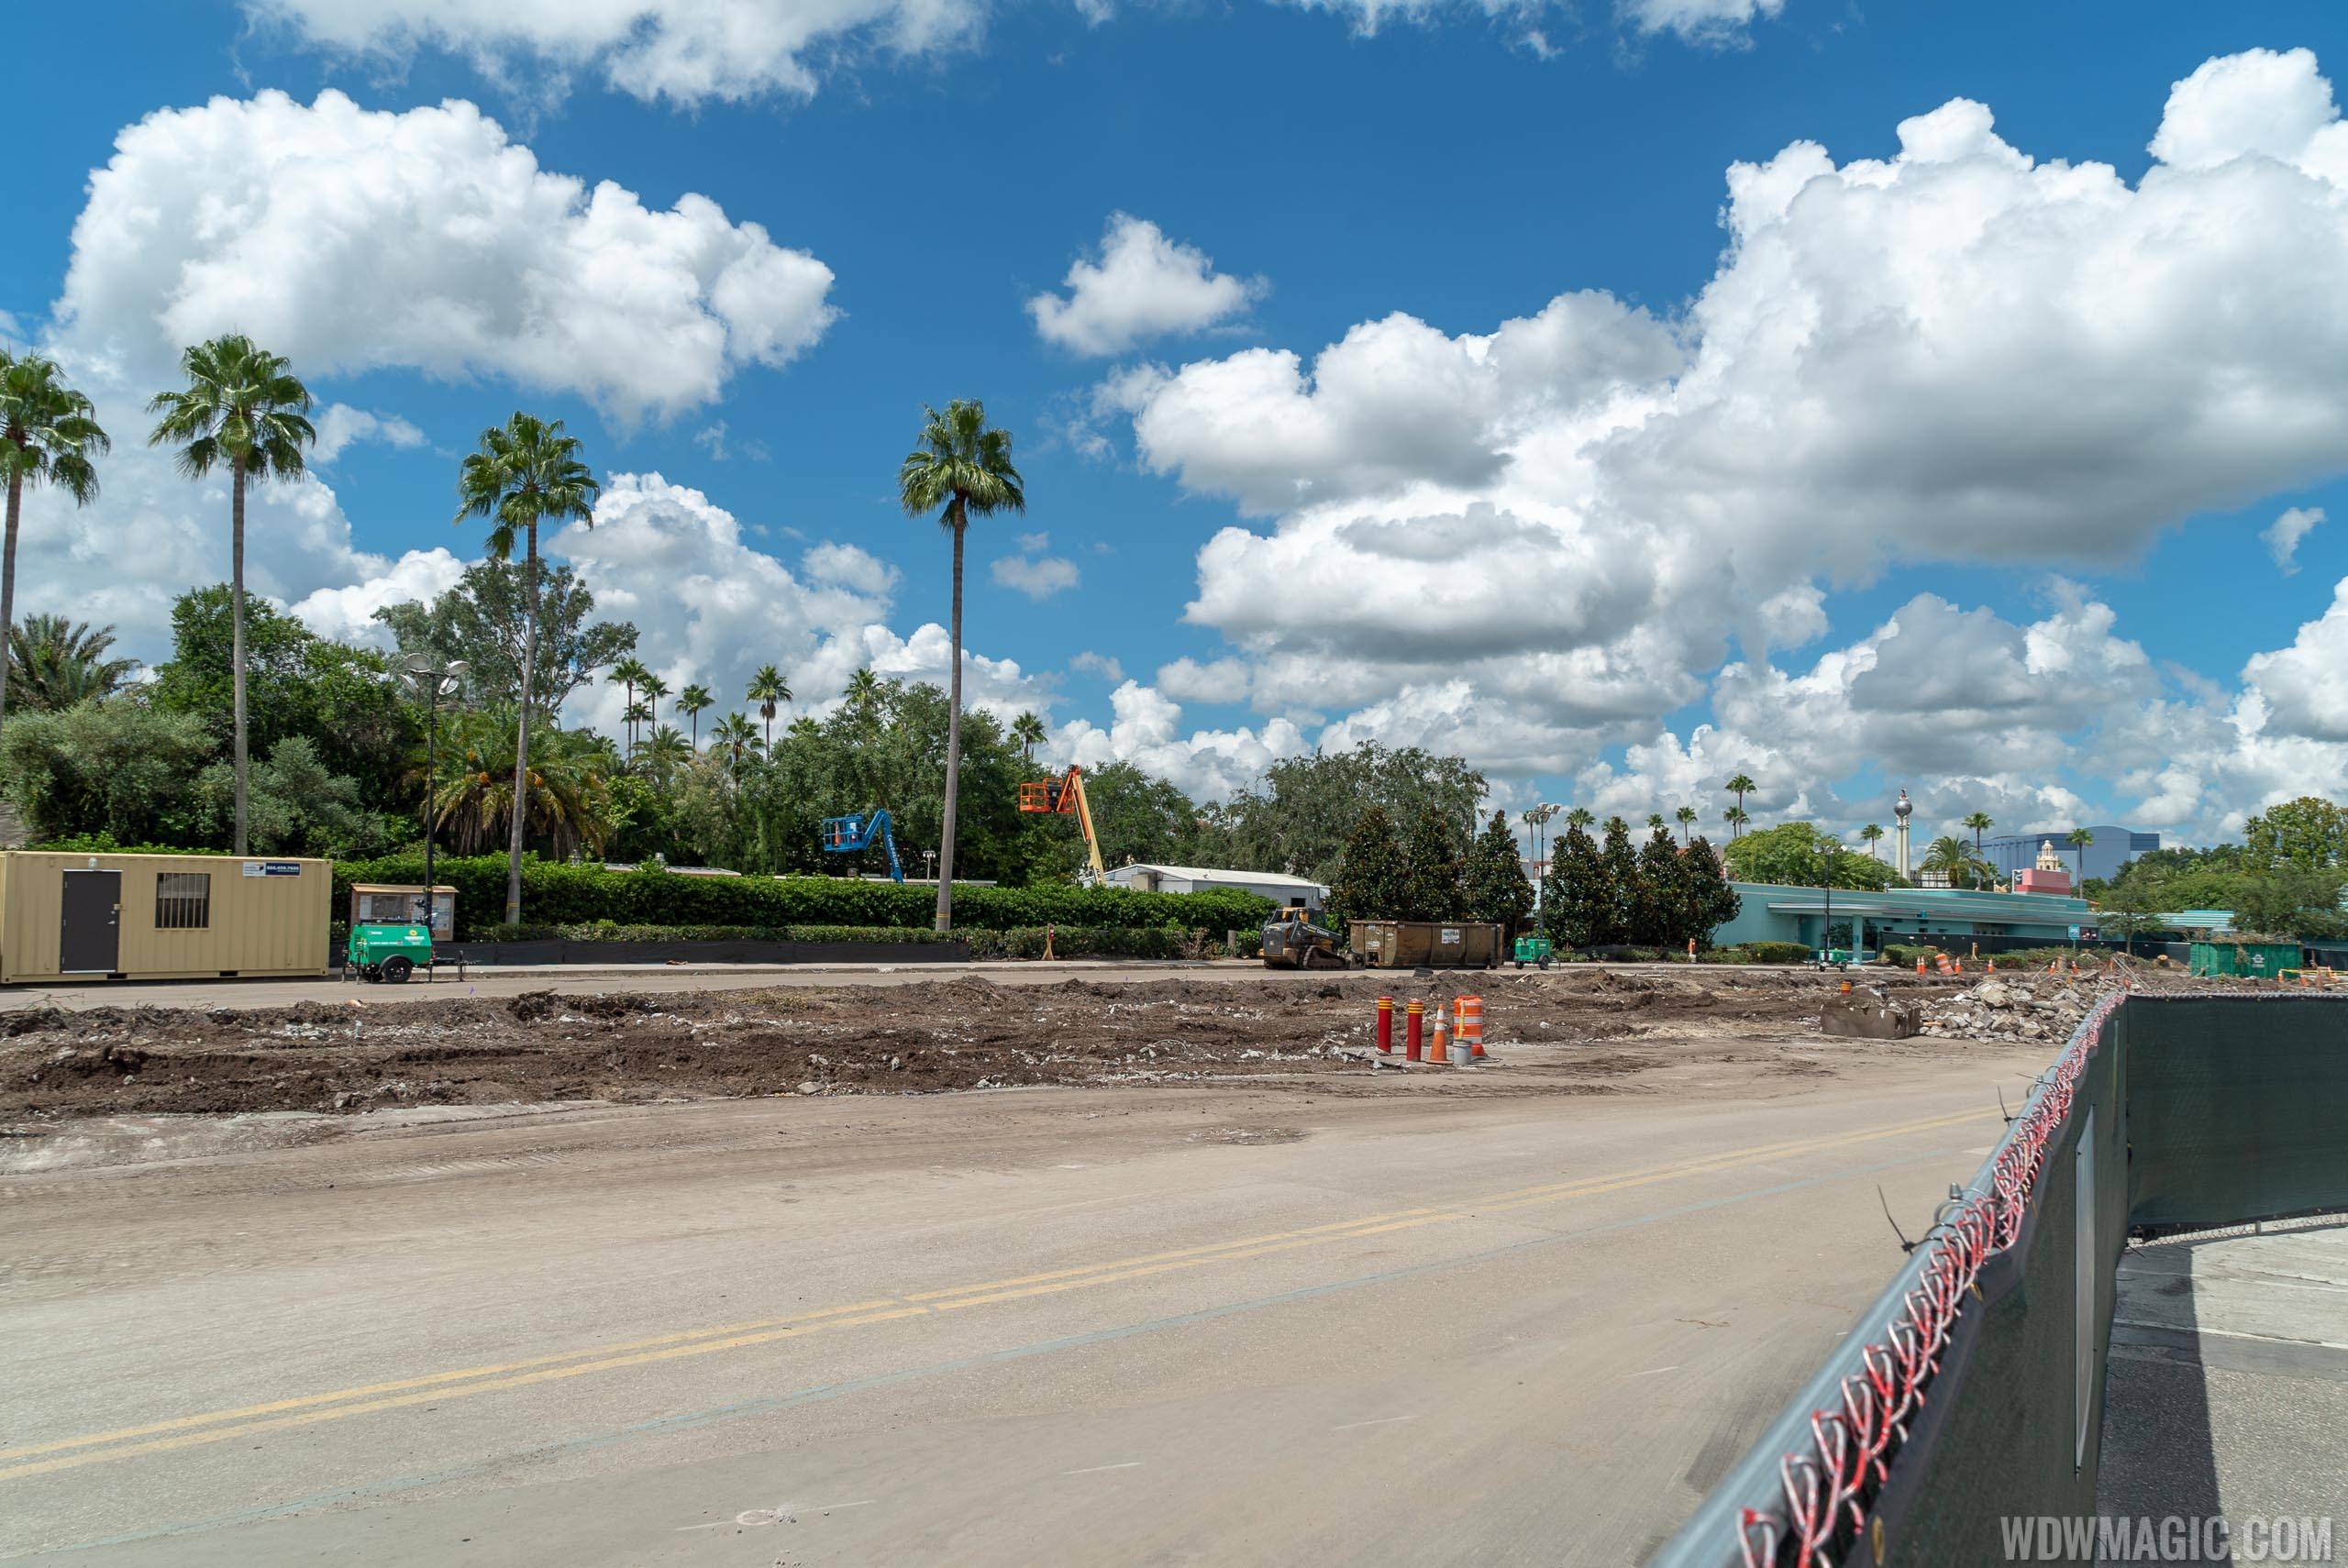 Disney's Hollywood Studios former bus stop demolition and main entrance work